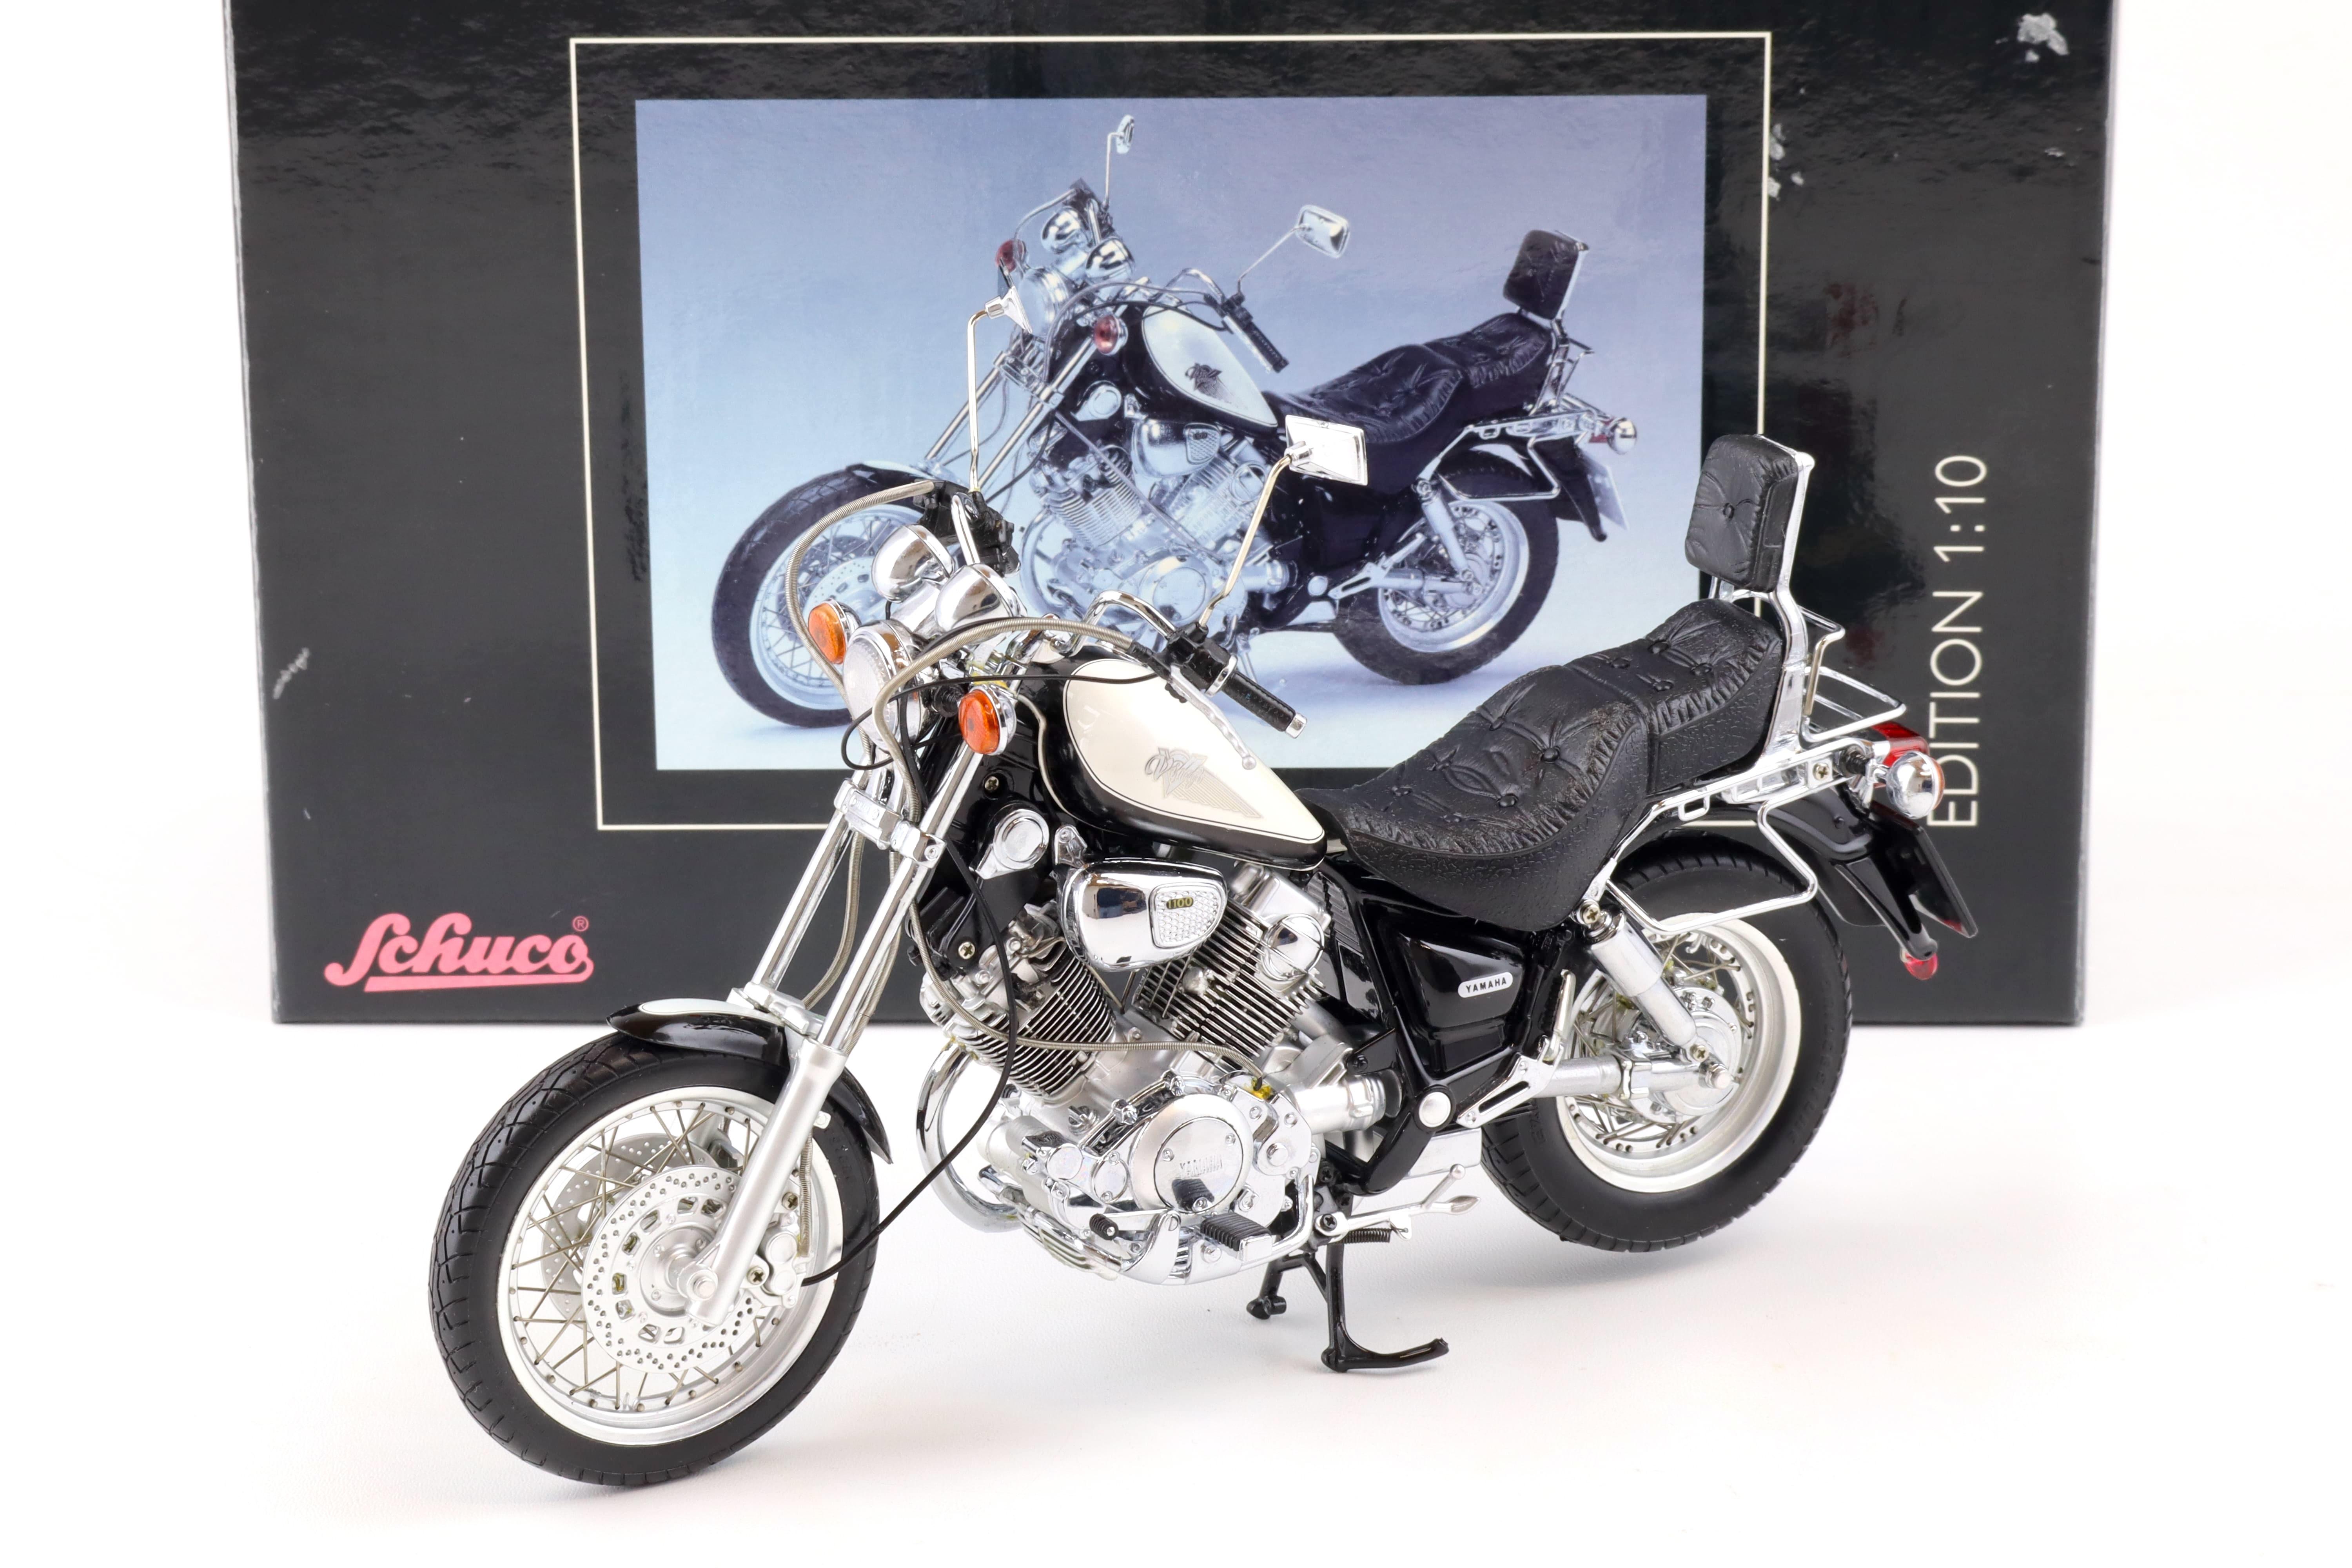 1:10 Schuco Yamaha Virago XV 1100 Motorrad black/ white 06660